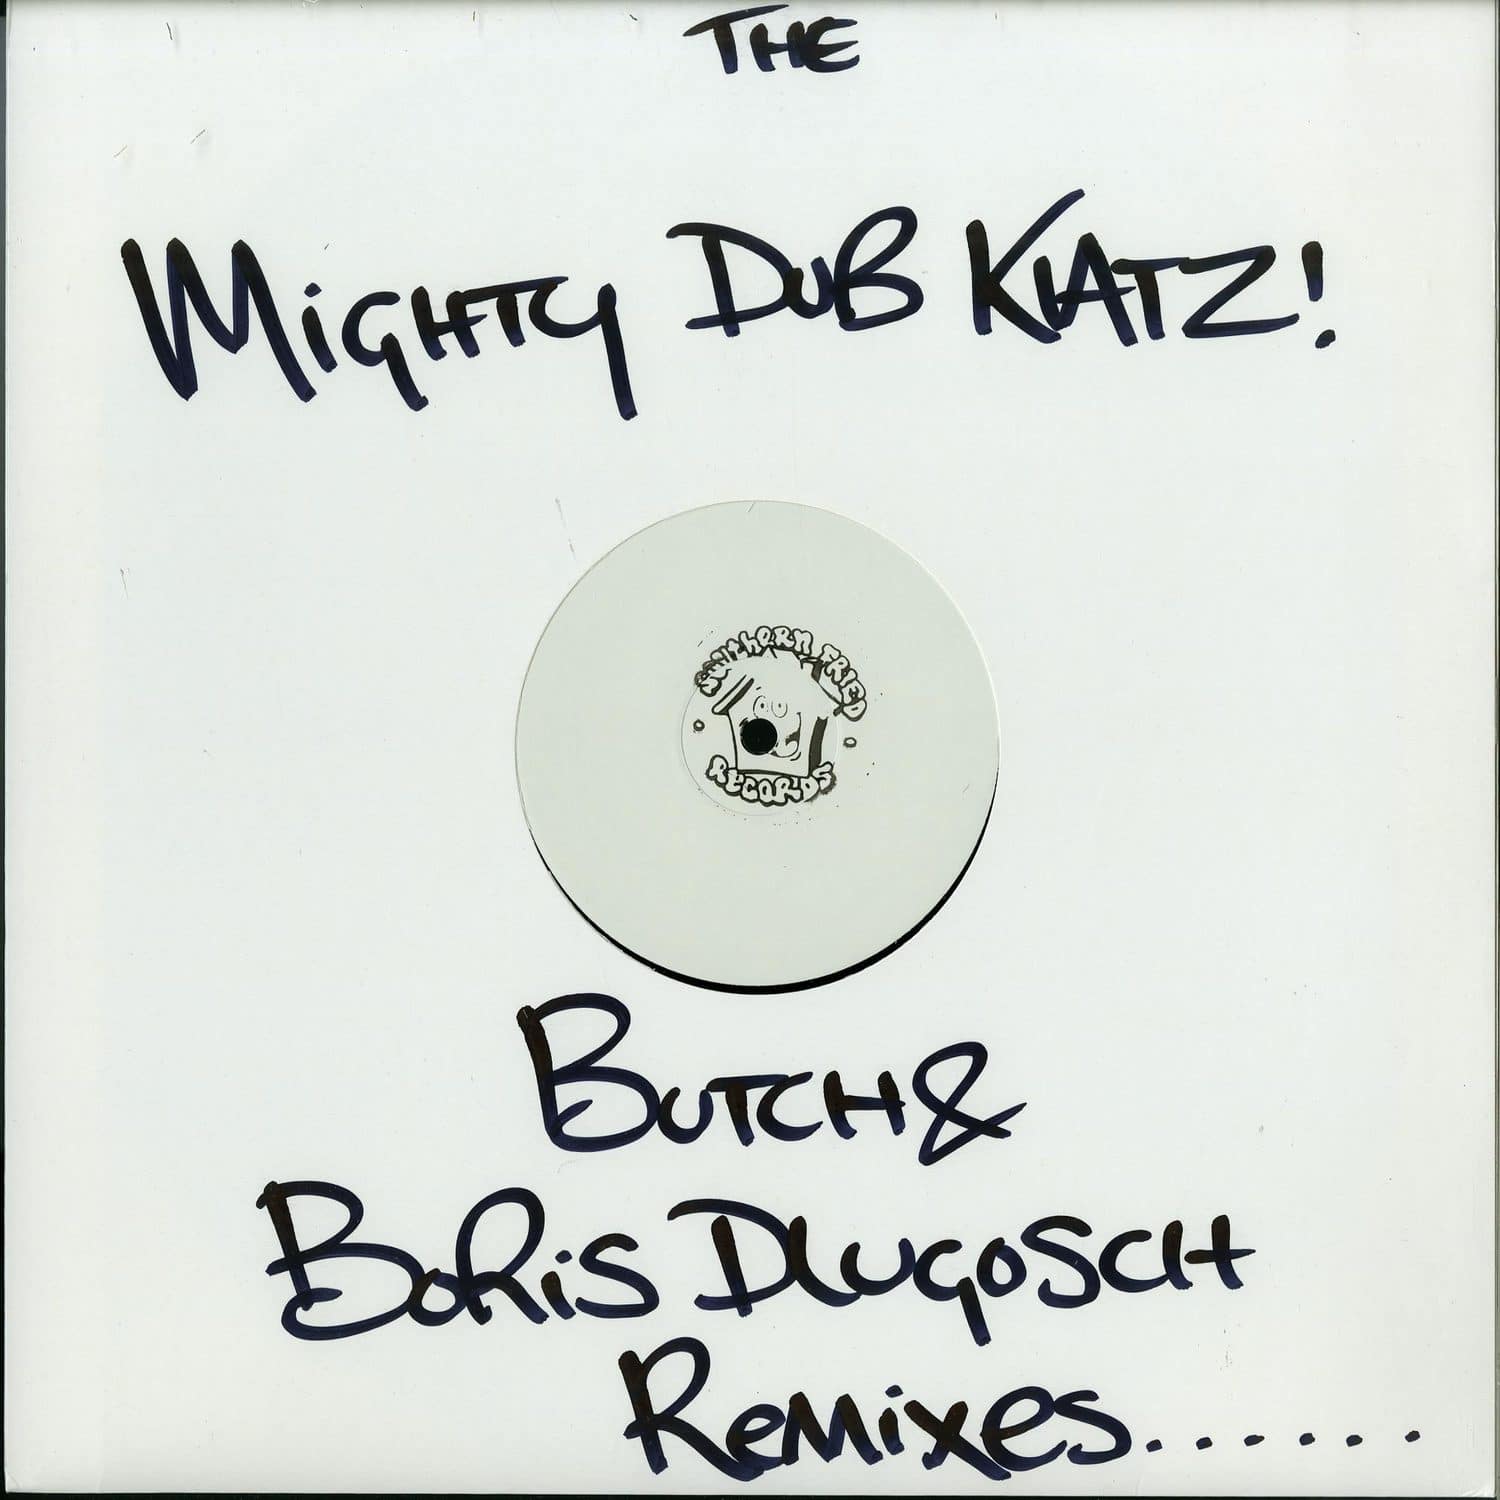 The Mighty Dub Katz - BUTCH & BORIS DLUGOSCH REMIXES